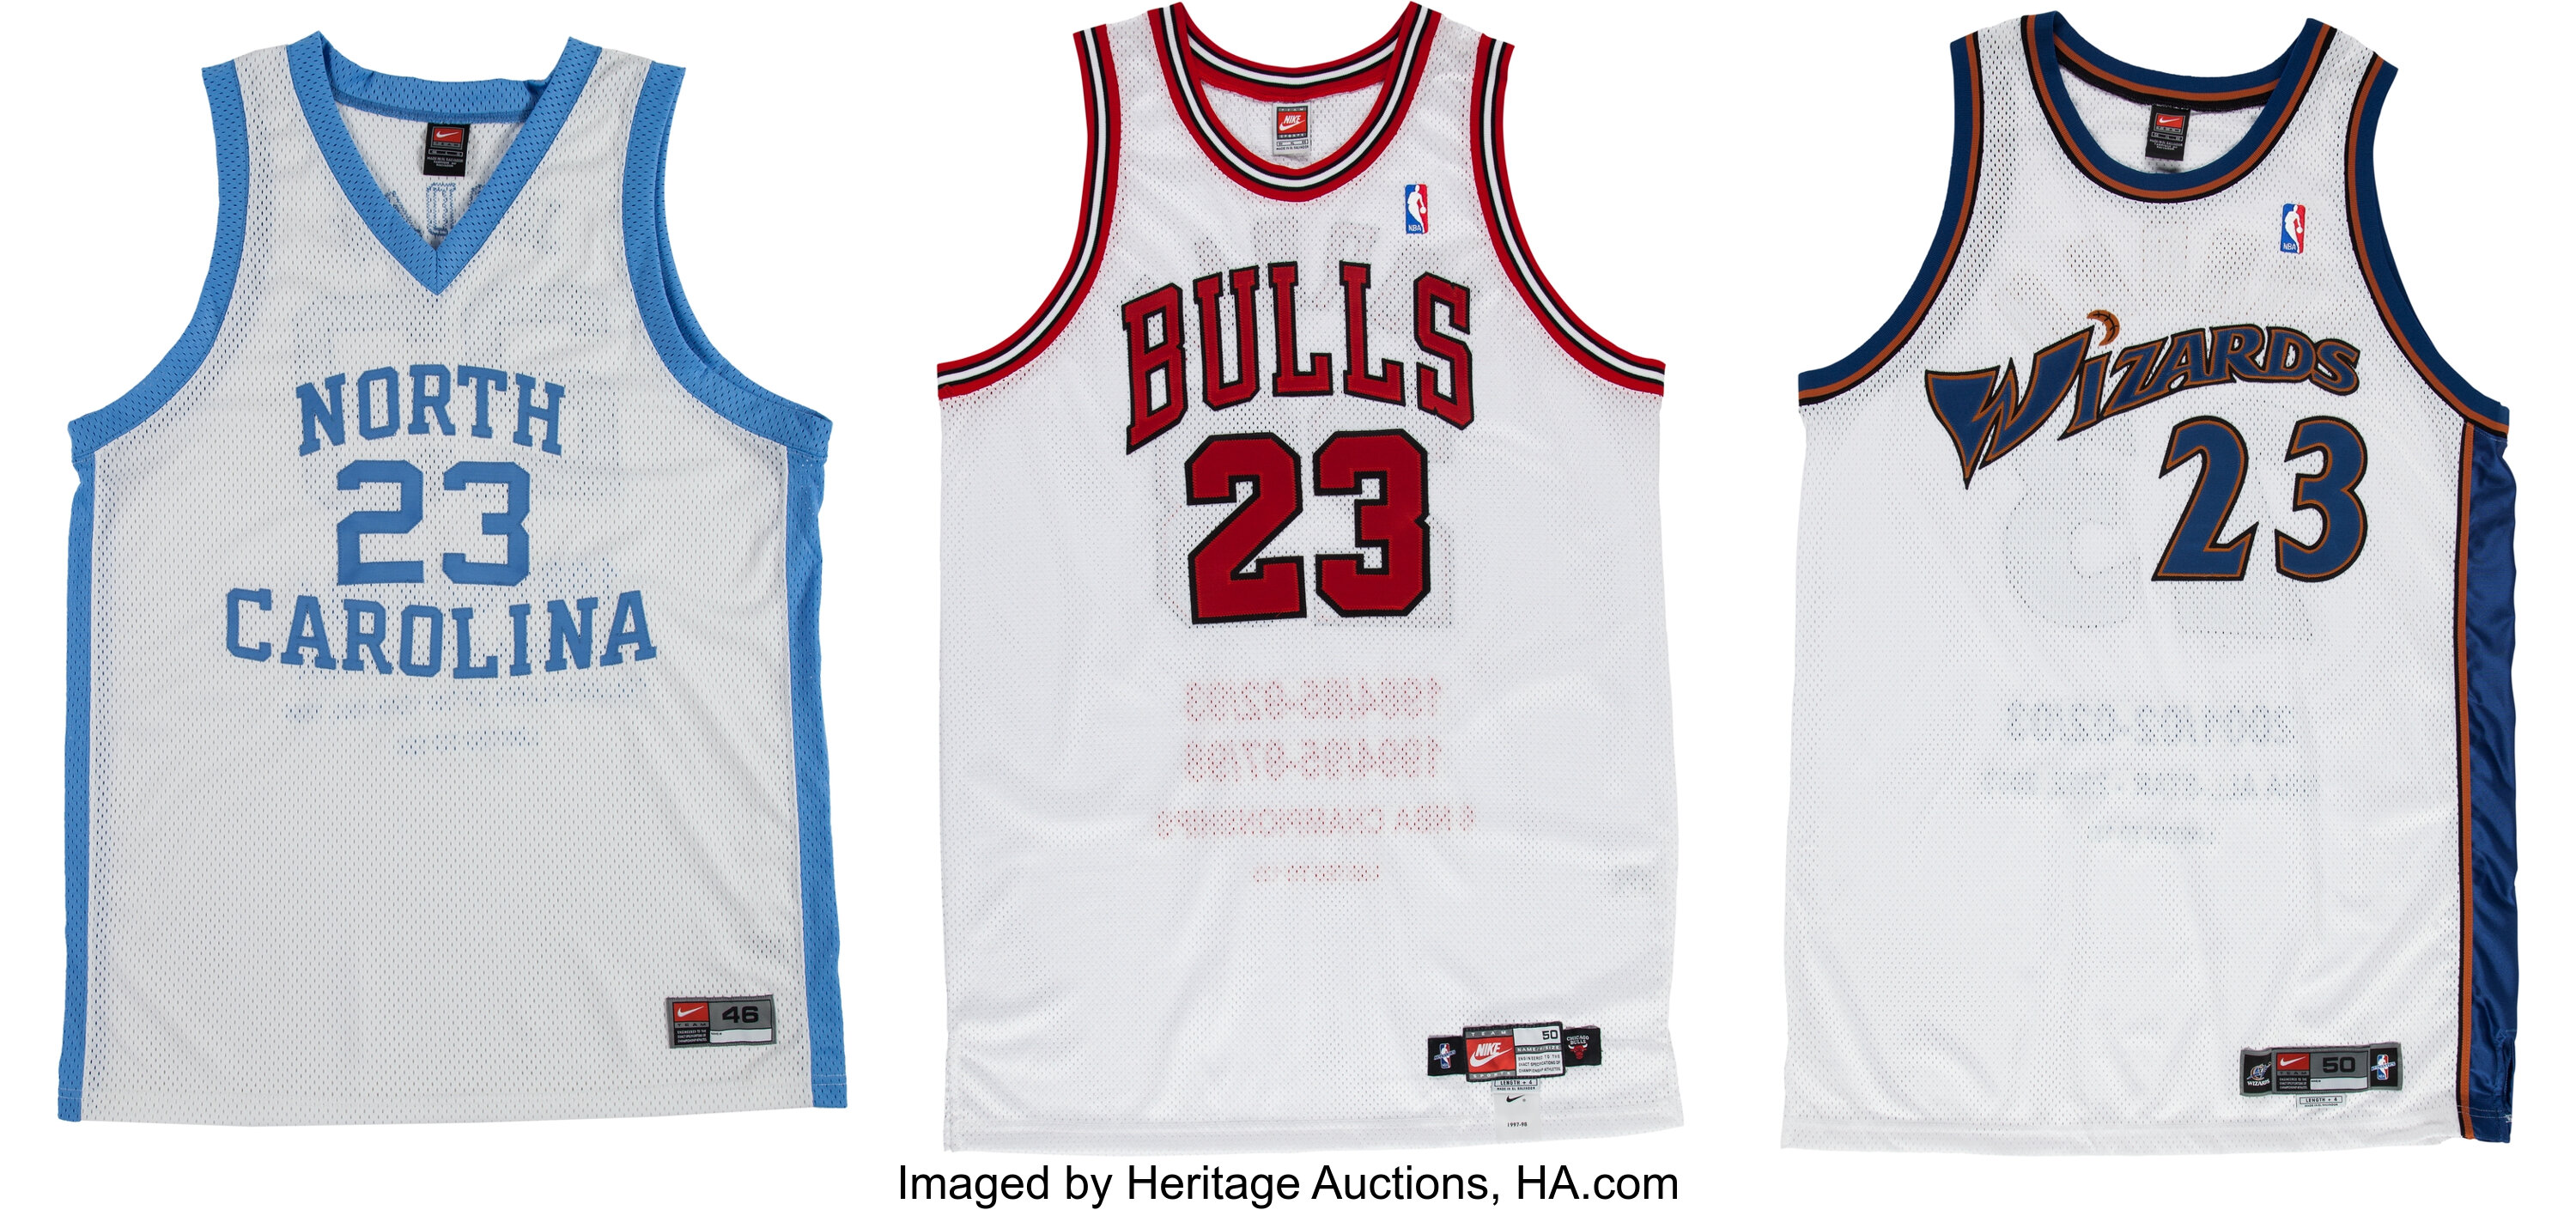 Jordan, Shirts, Nike Washington Wizards 23 Michael Jordan Jersey